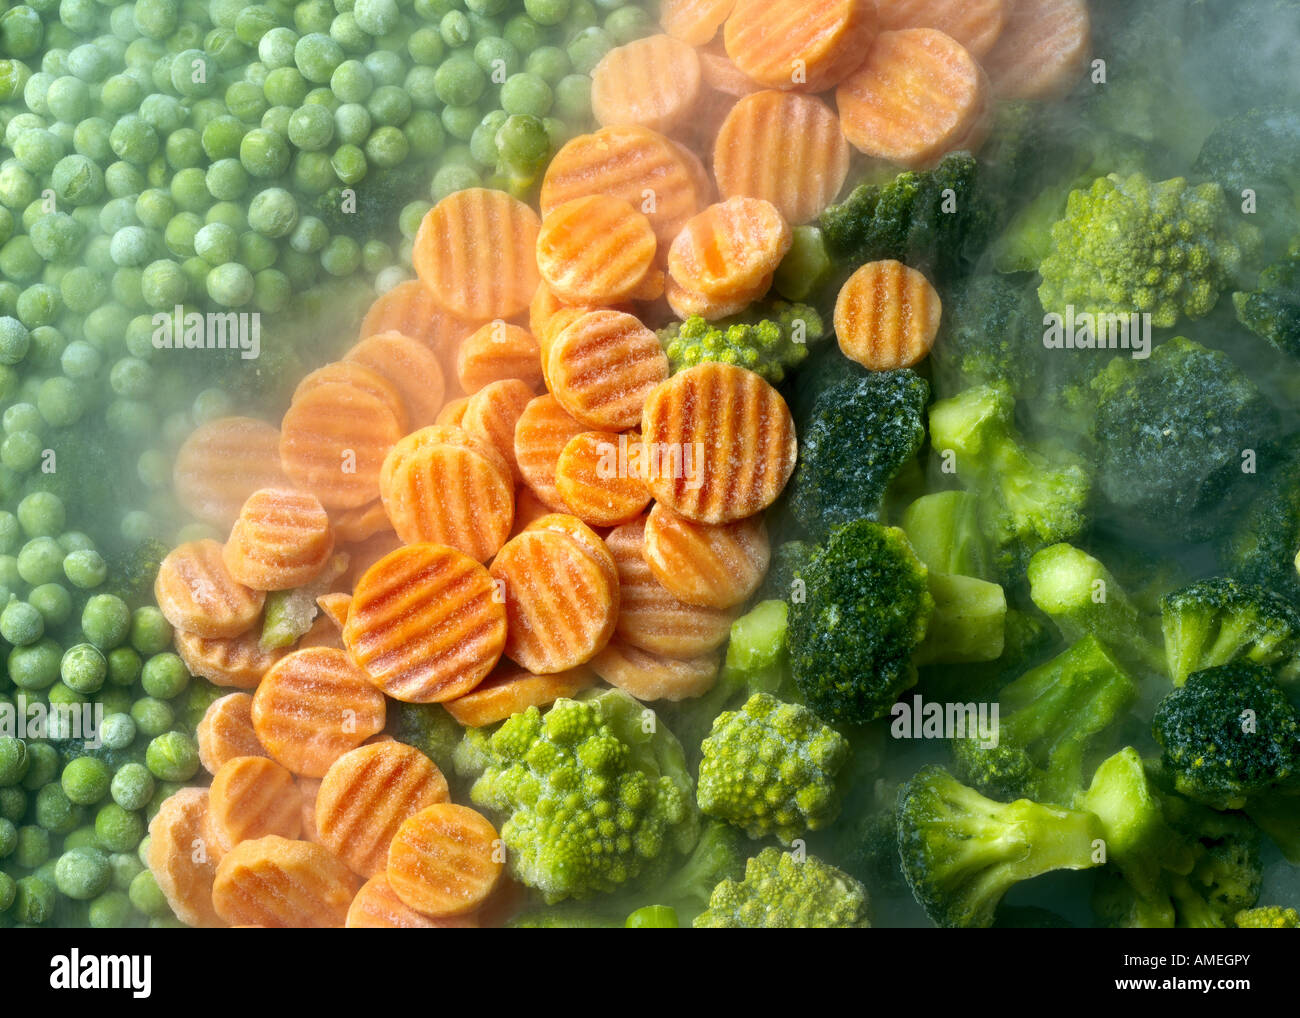 frozen vegetable Stock Photo